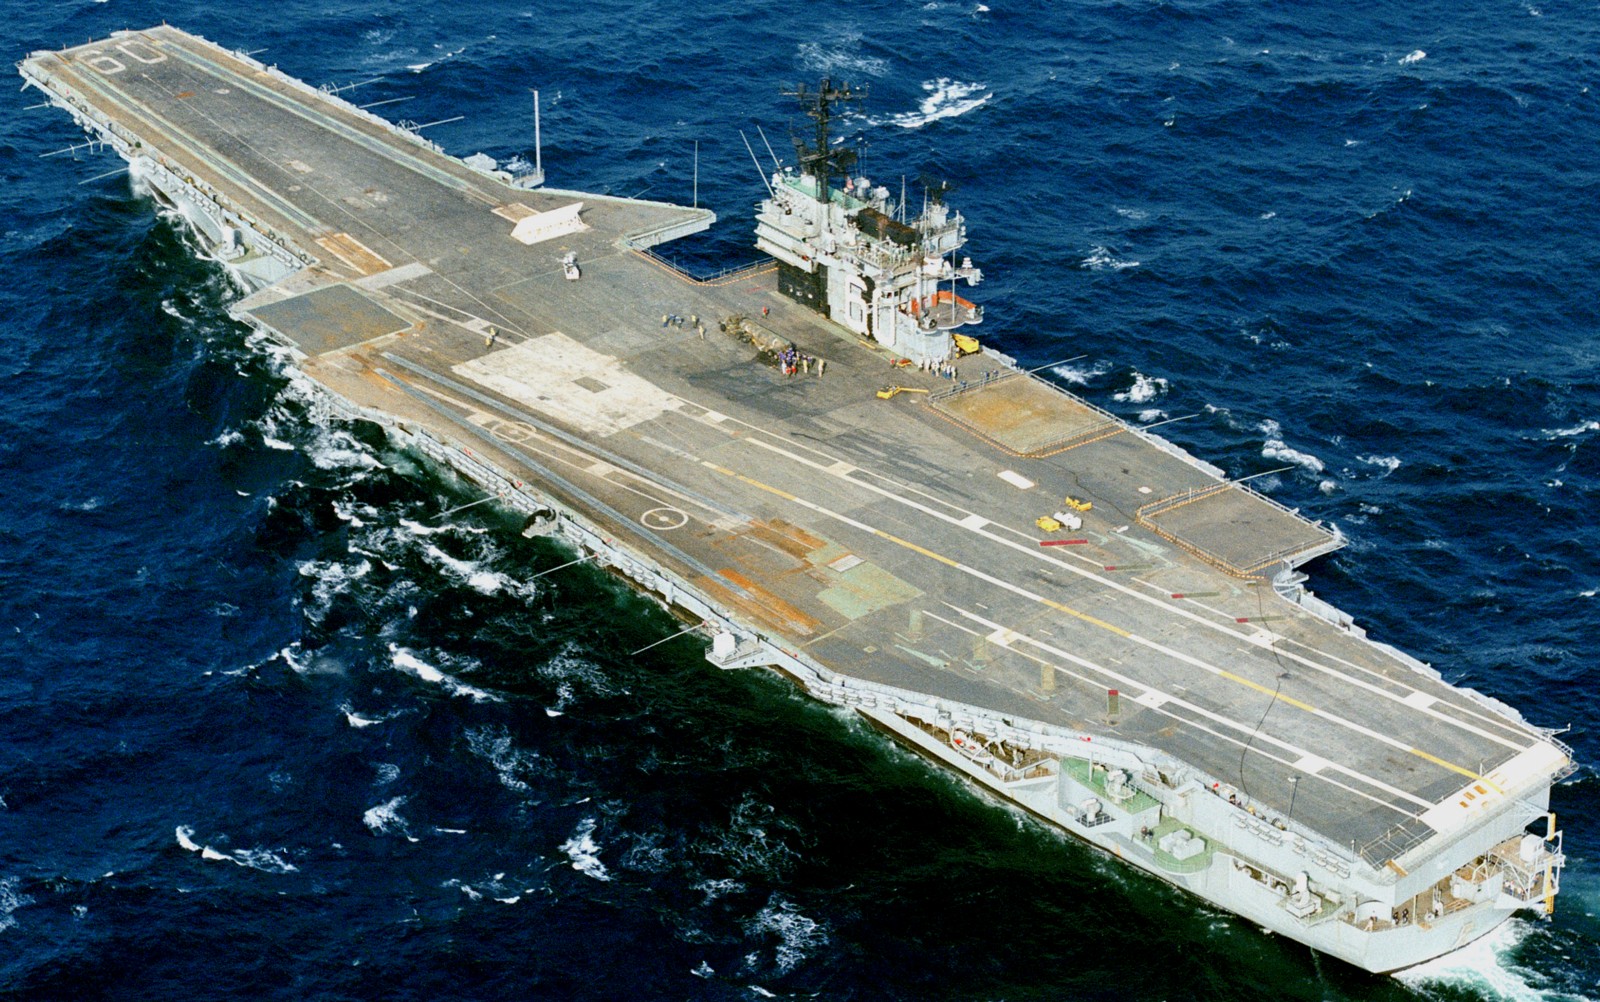 cv-60 uss saratoga forrestal class aircraft carrier us navy trials slep 1982 56